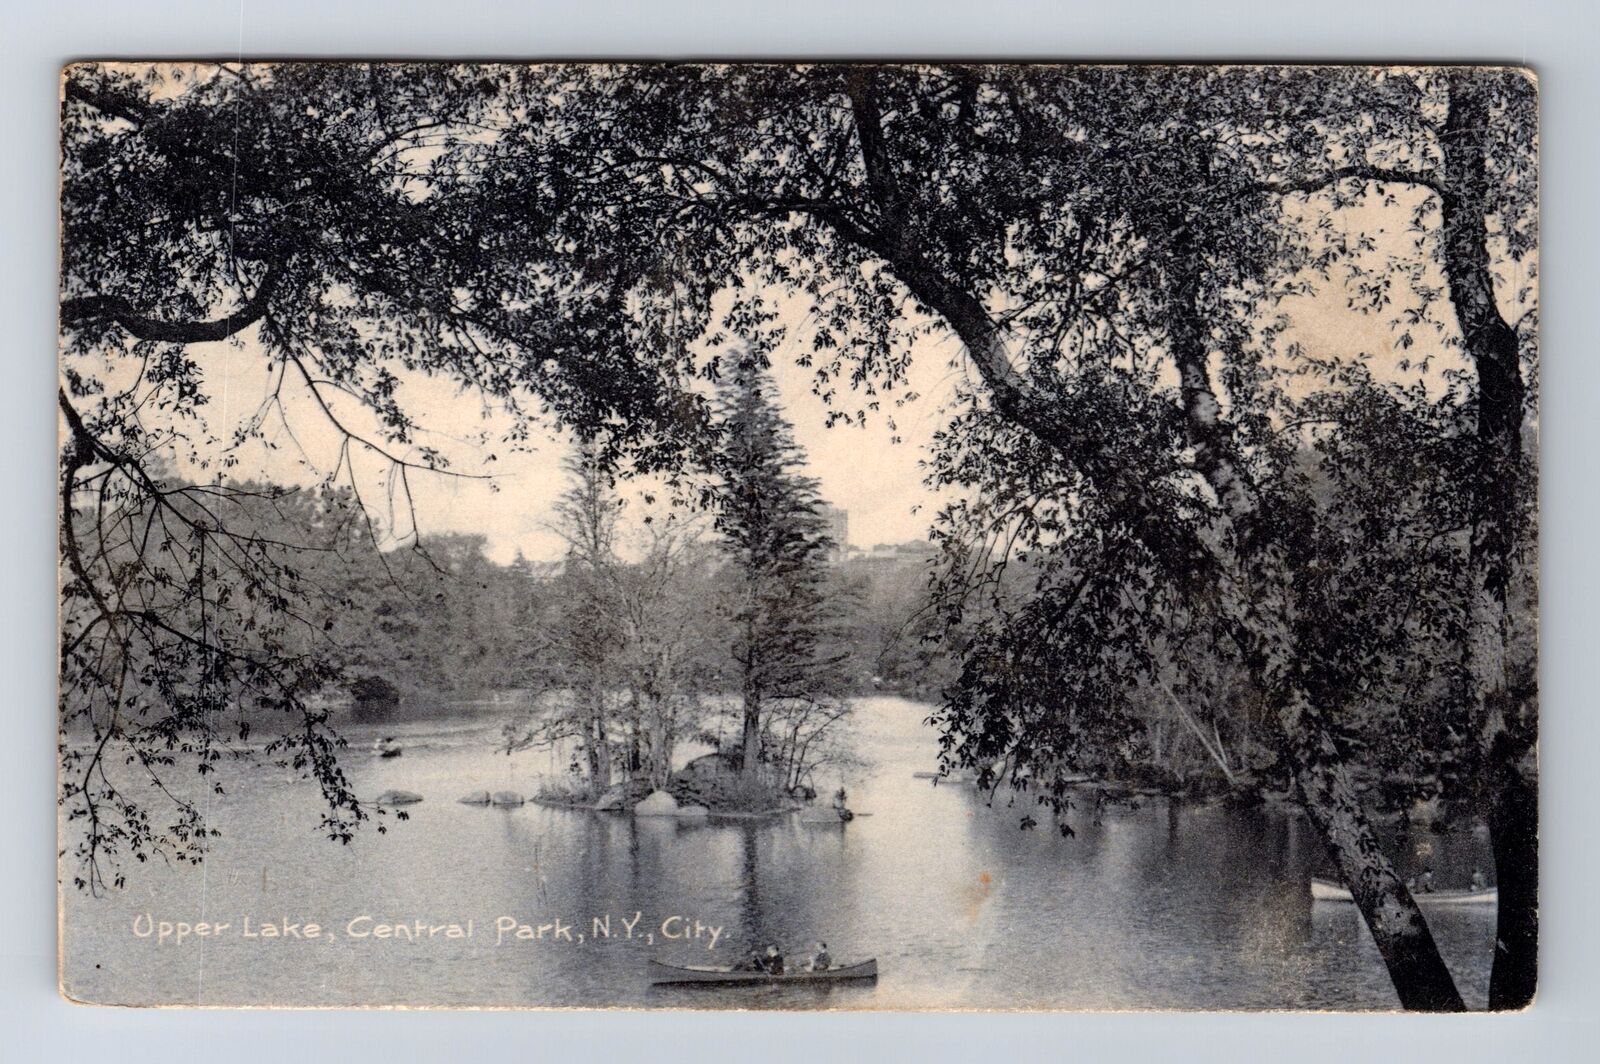 New York City NY-Upper Lake, Central Park, Antique, Vintage Postcard